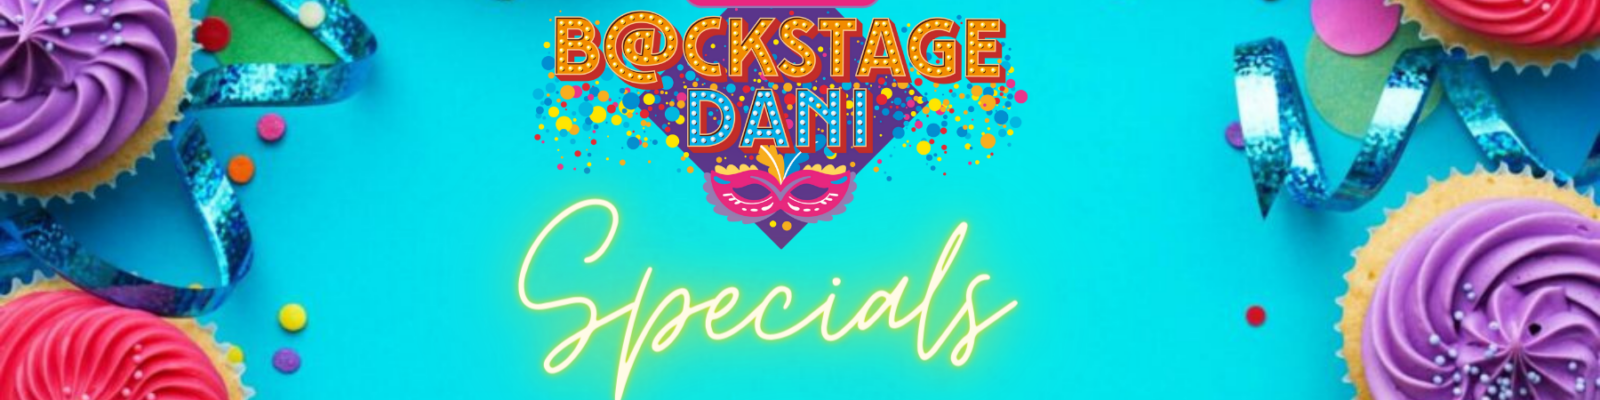 Backstage Specials (1800 x 600 px)(3)